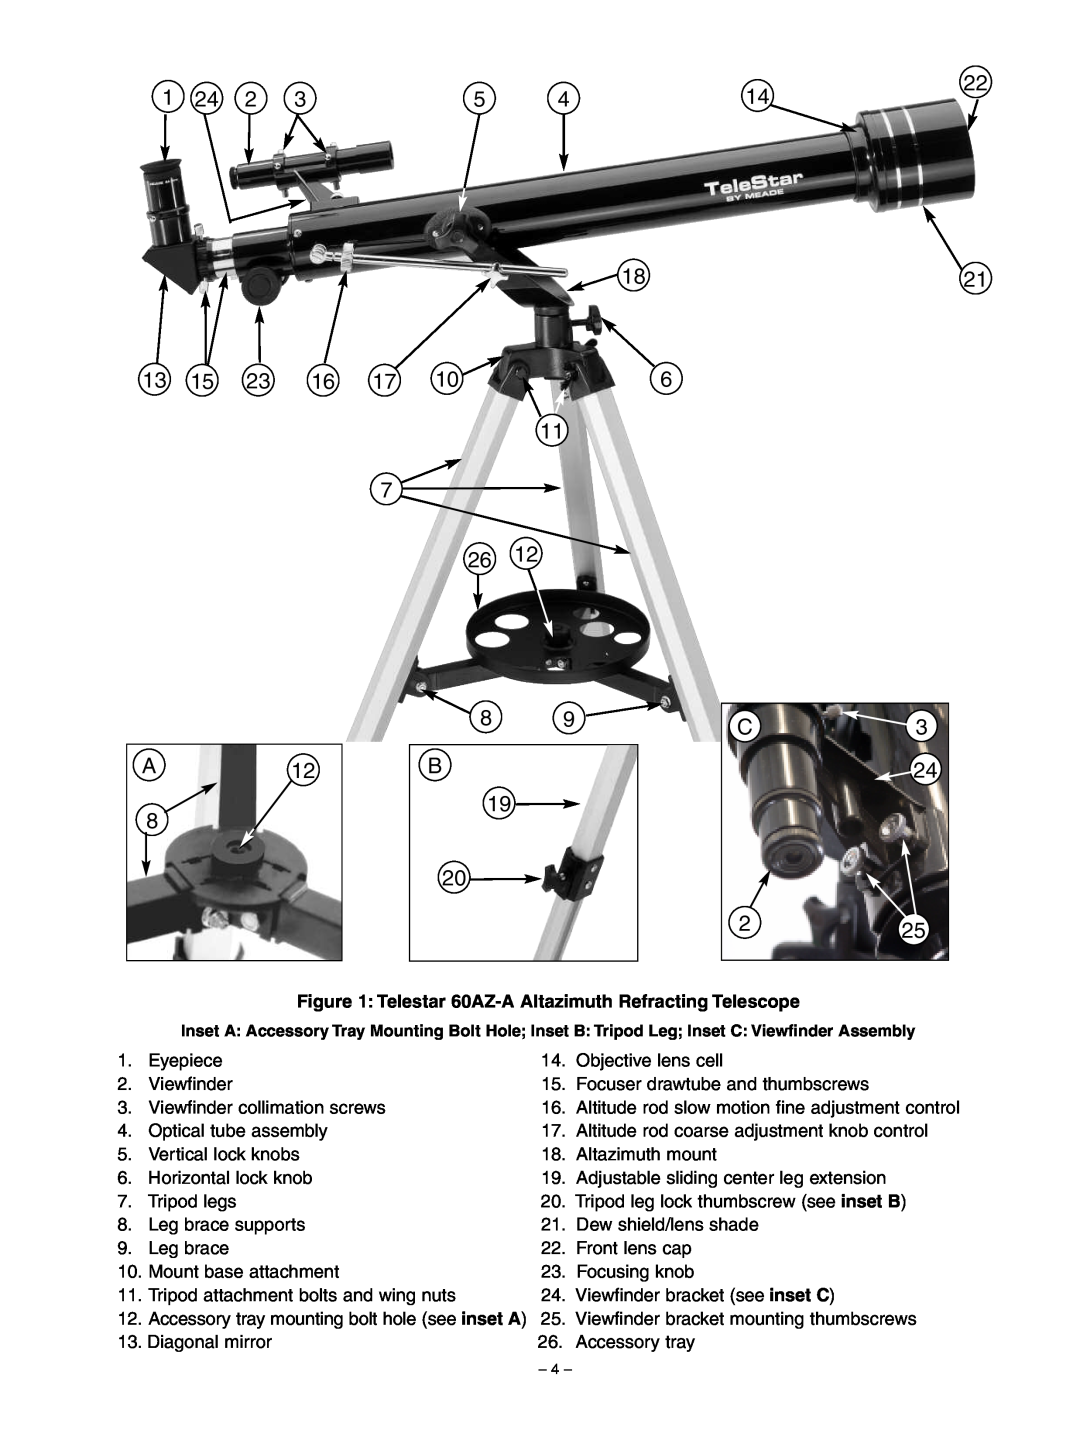 Meade instruction manual 1821, 13 15 23 A12, Telestar 60AZ-A Altazimuth Refracting Telescope 